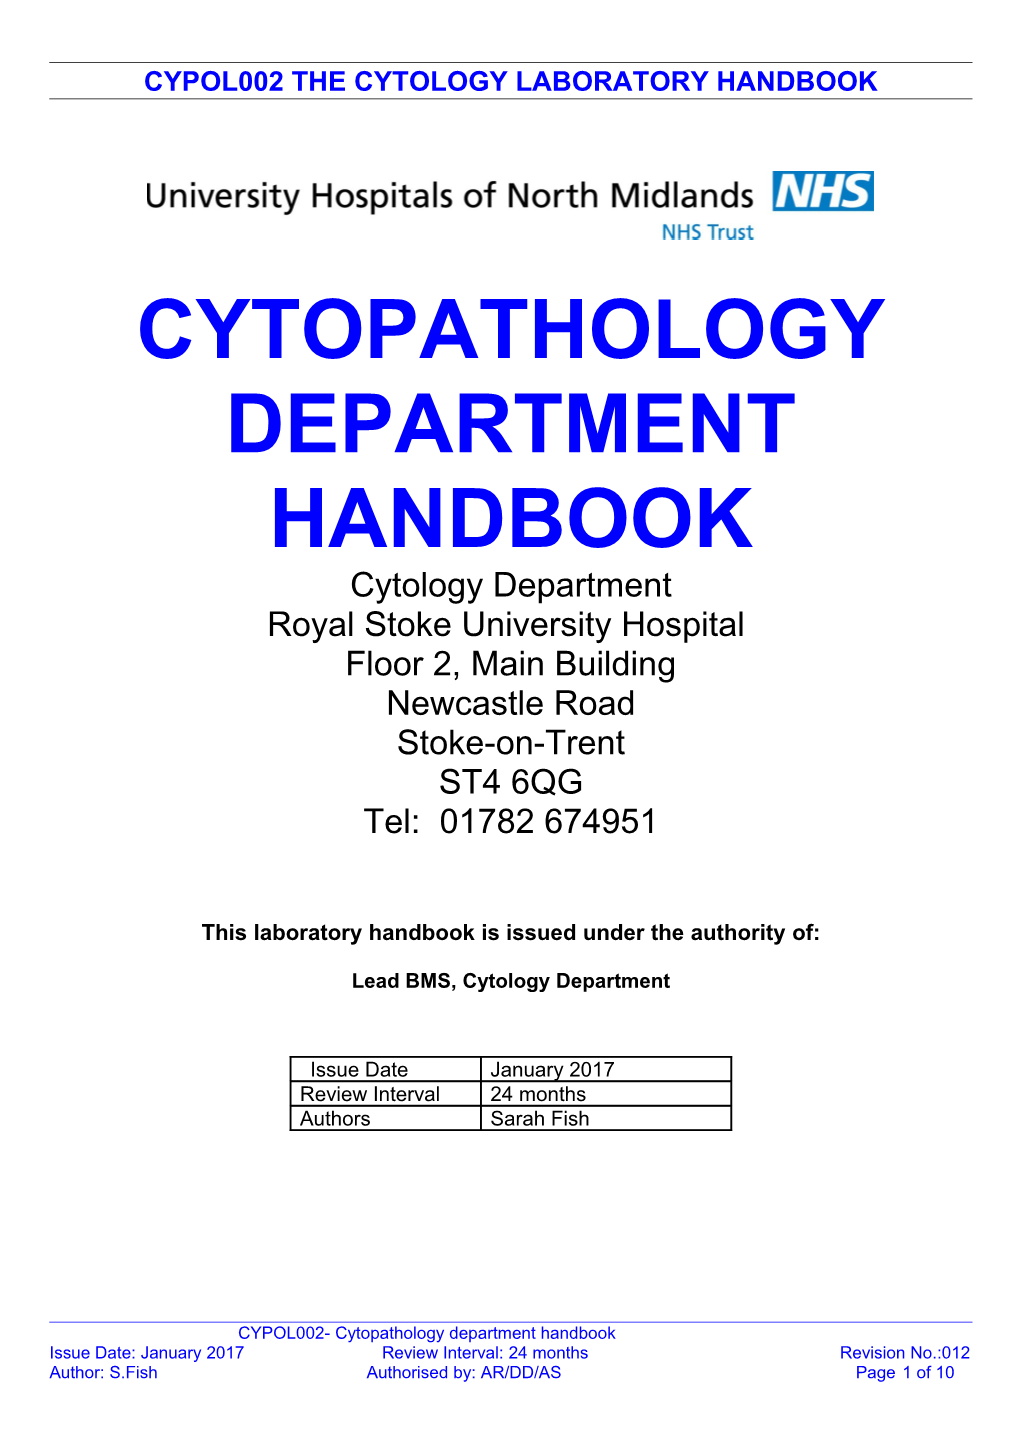 Cypol002 the Cytology Laboratory Handbook